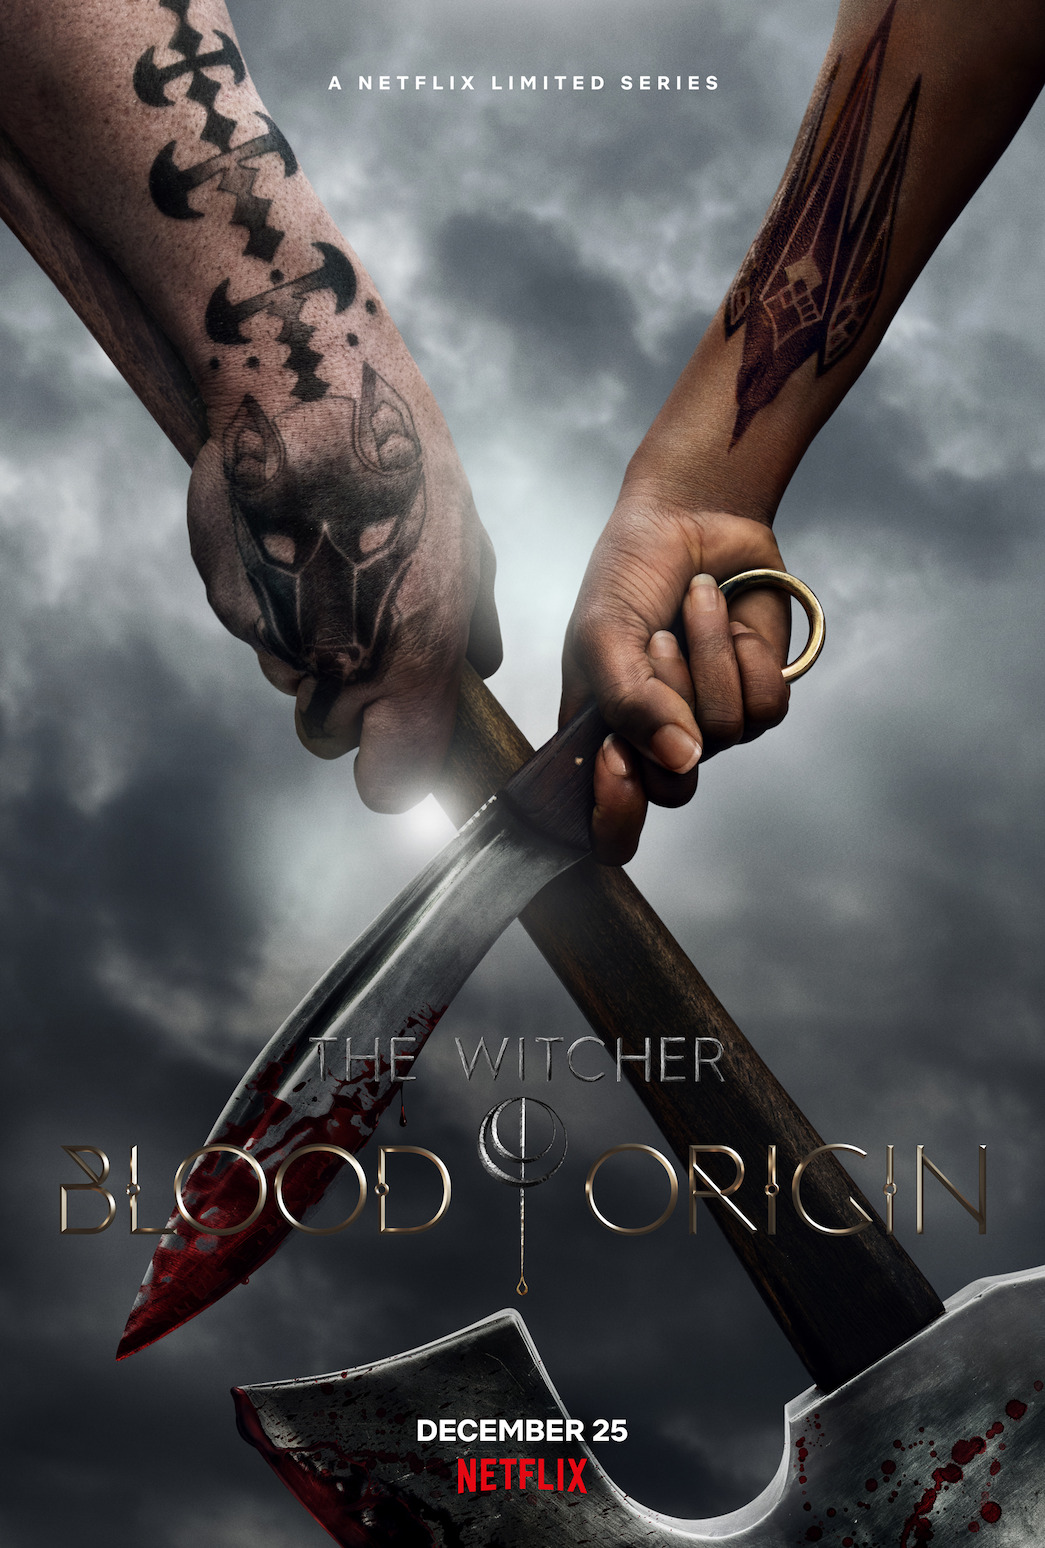 Blood Origin poster